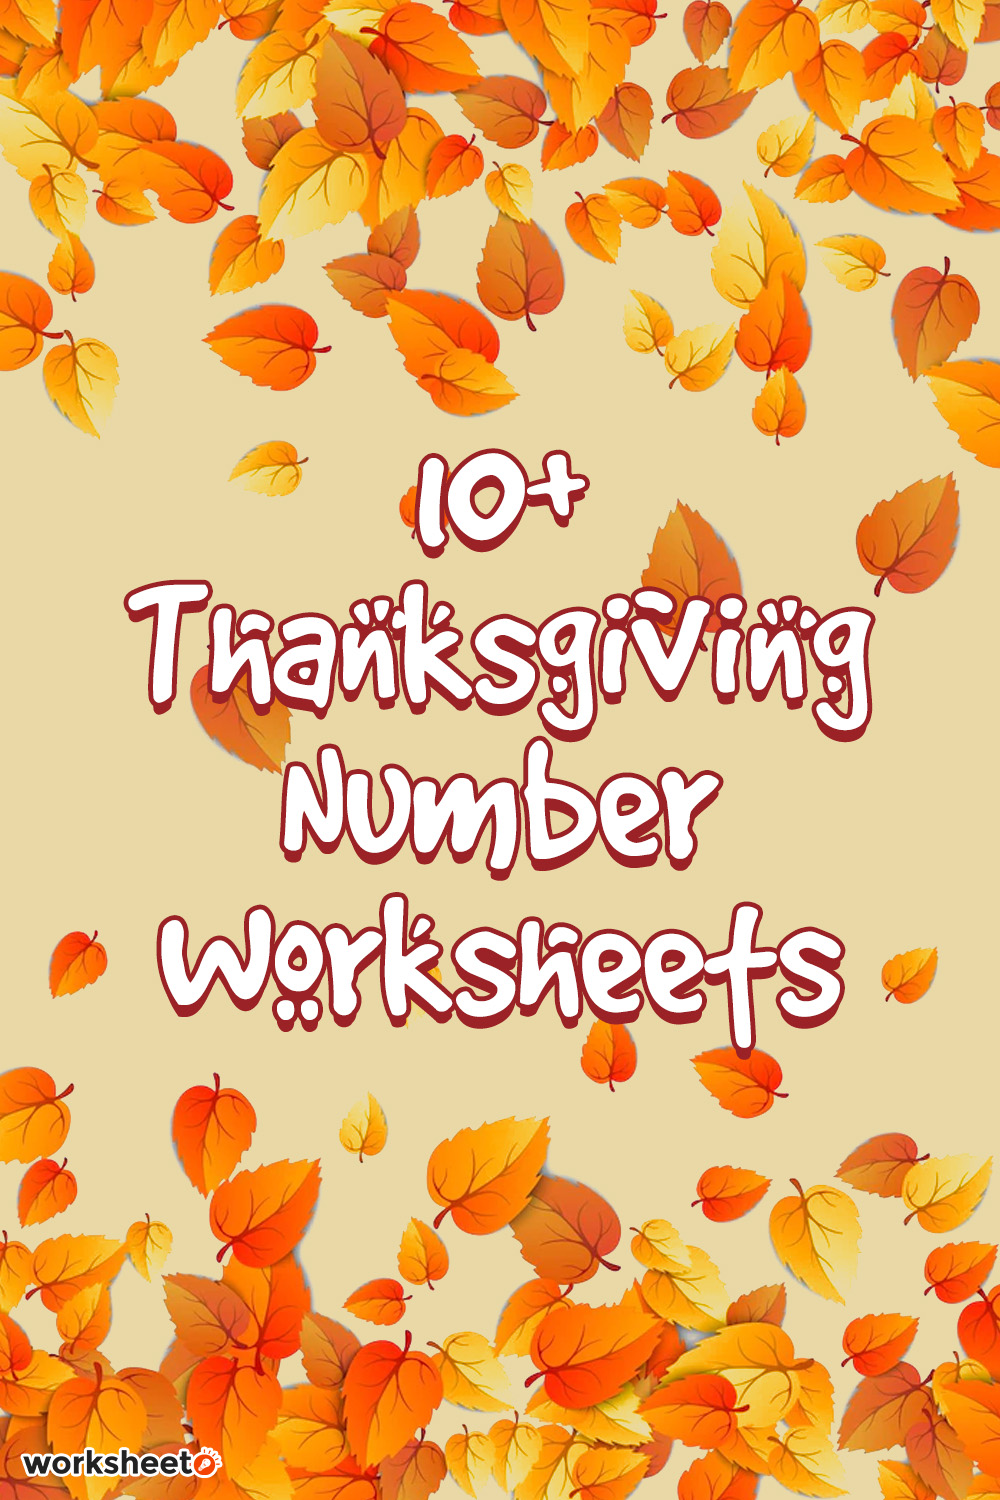 14 Images of Thanksgiving Number Worksheets